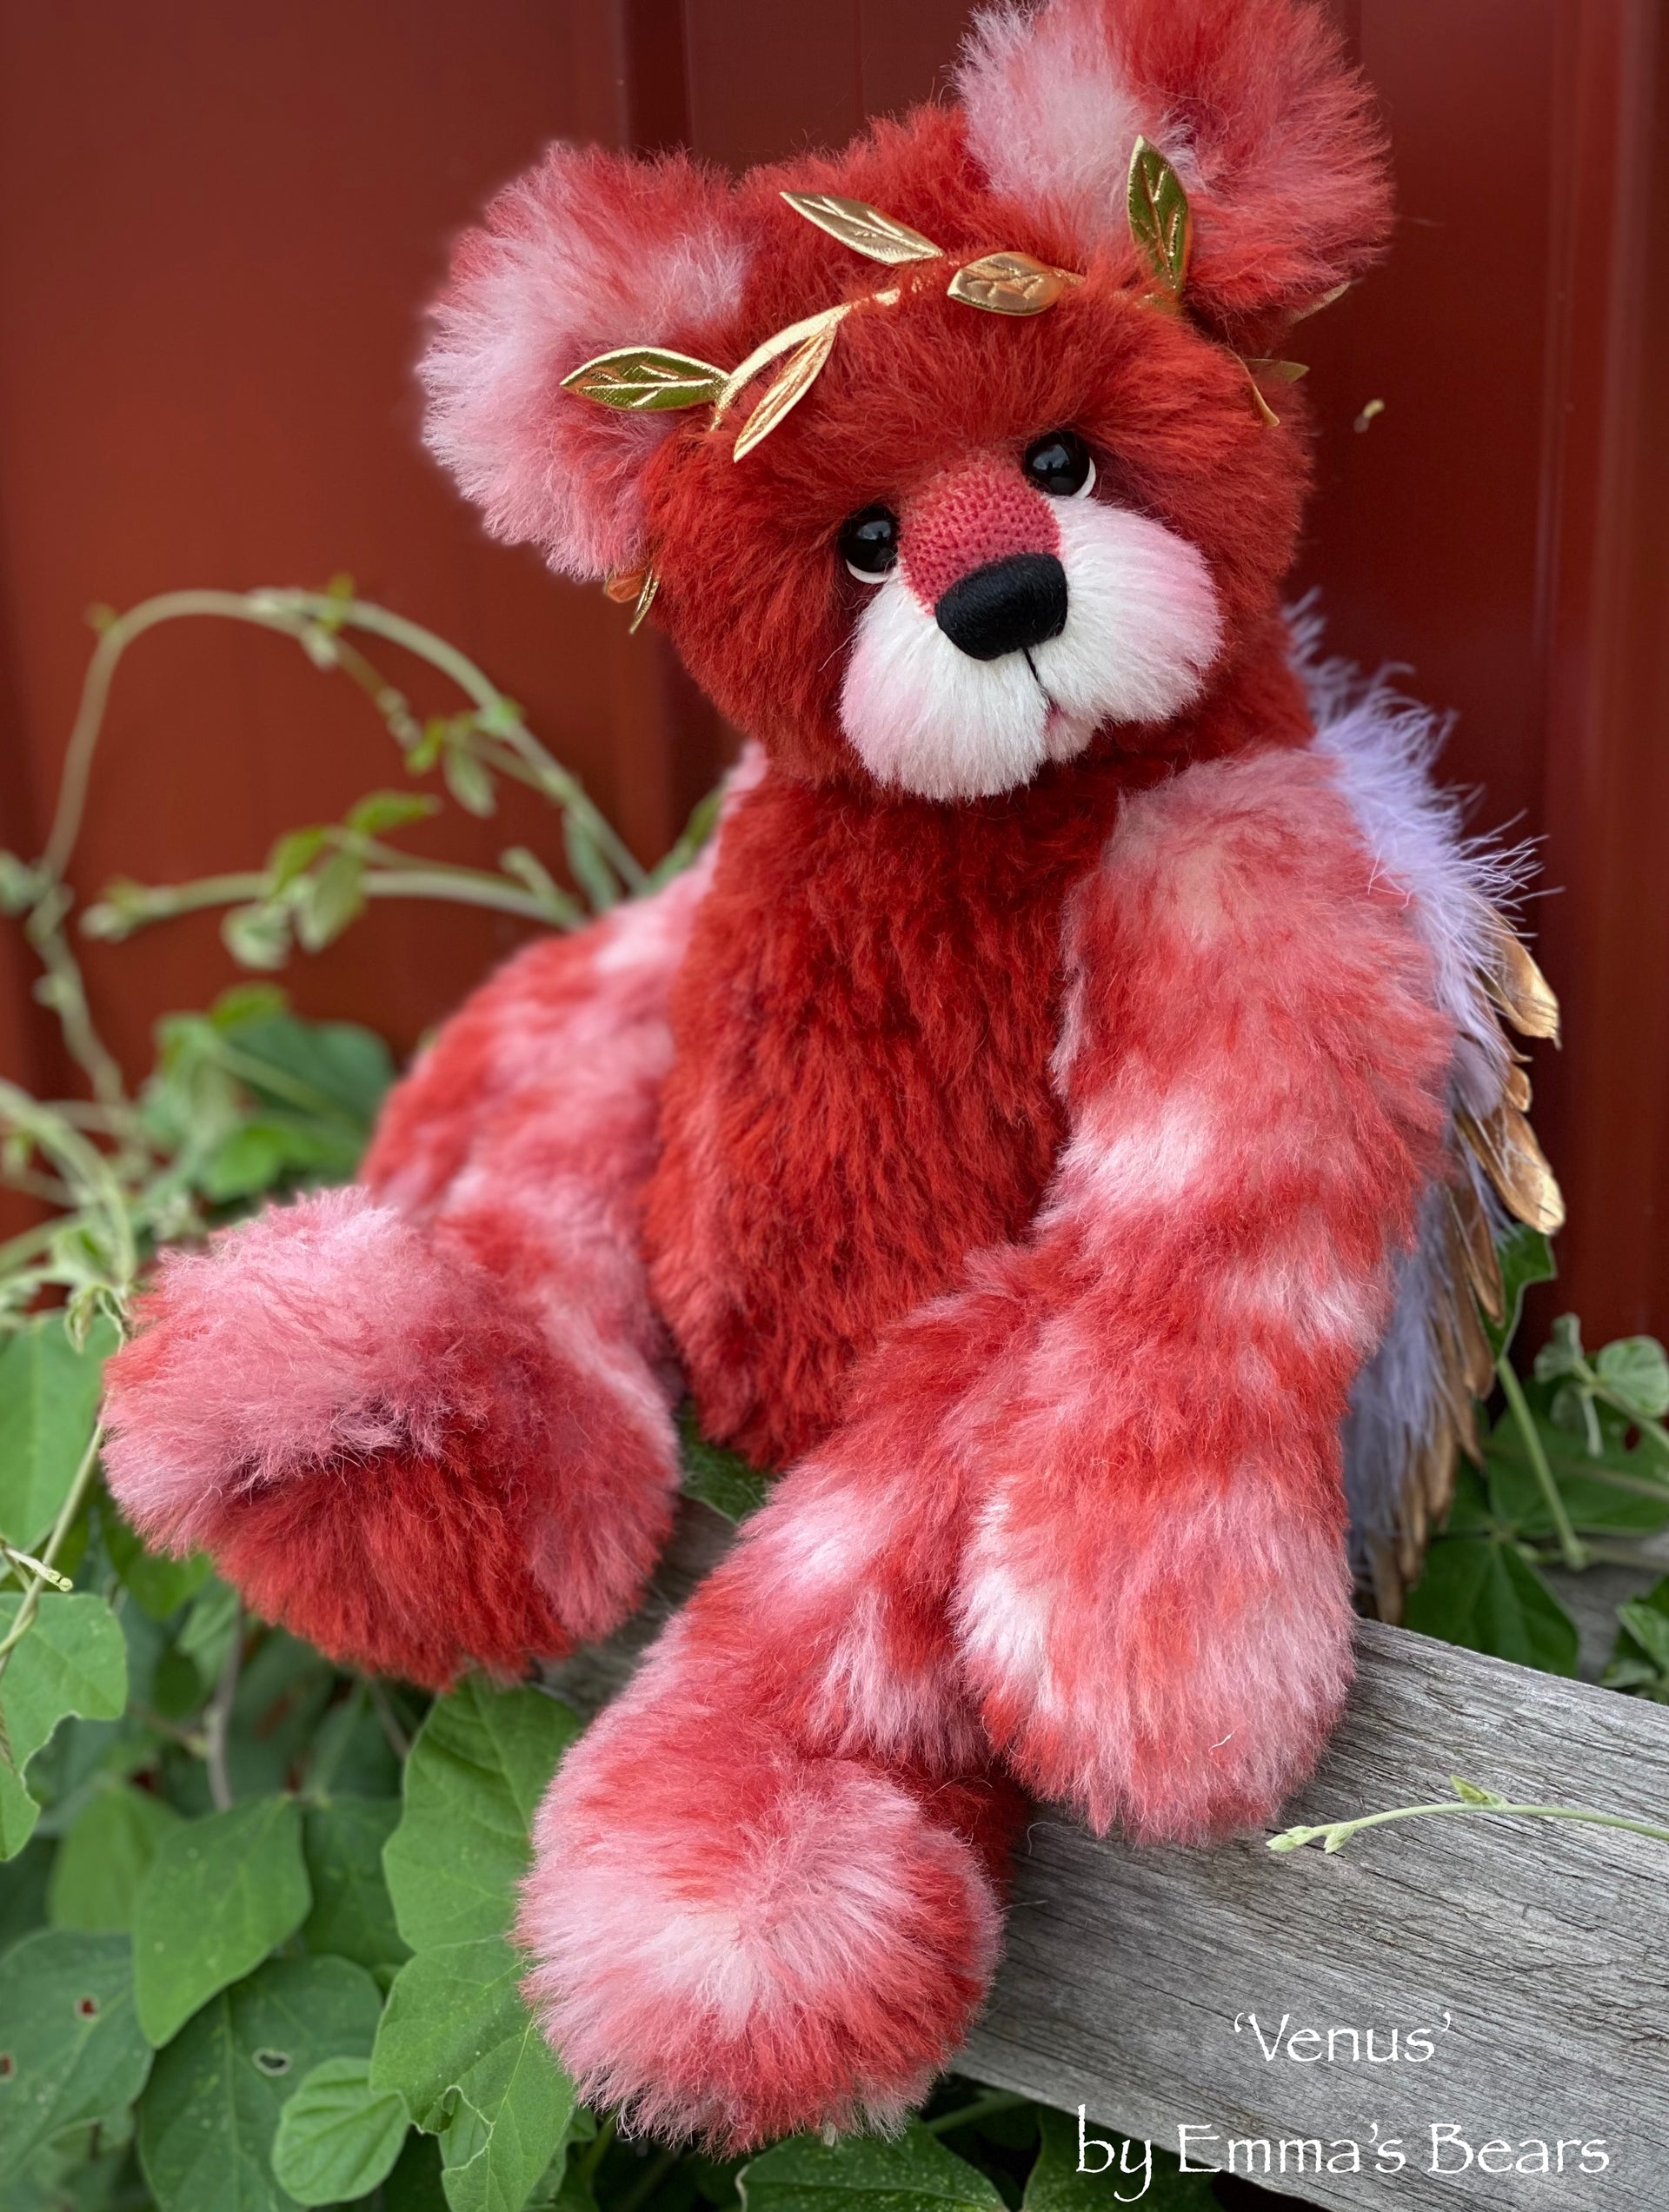 Venus - 14" Hand-dyed Valentines alpaca artist bear by Emma's Bears  - OOAK